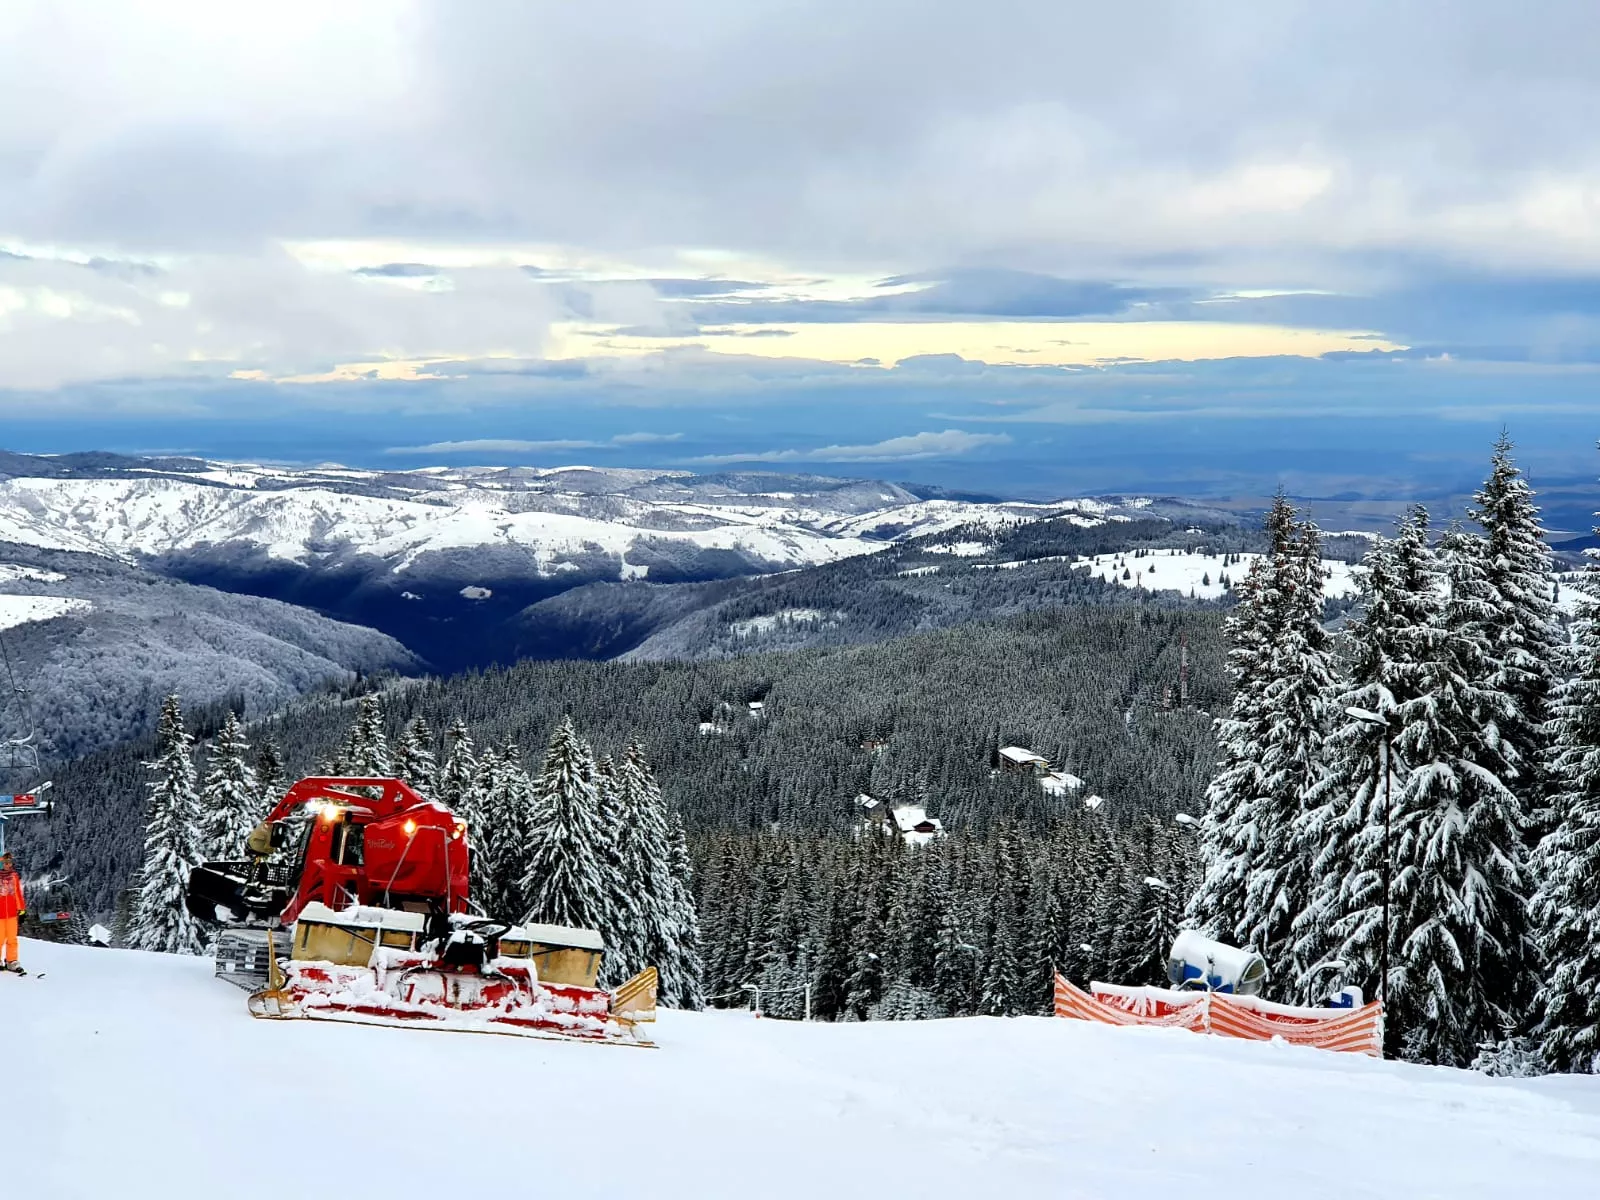 Partia Oncesti in Romania, Europe | Snowboarding,Skiing - Rated 3.6